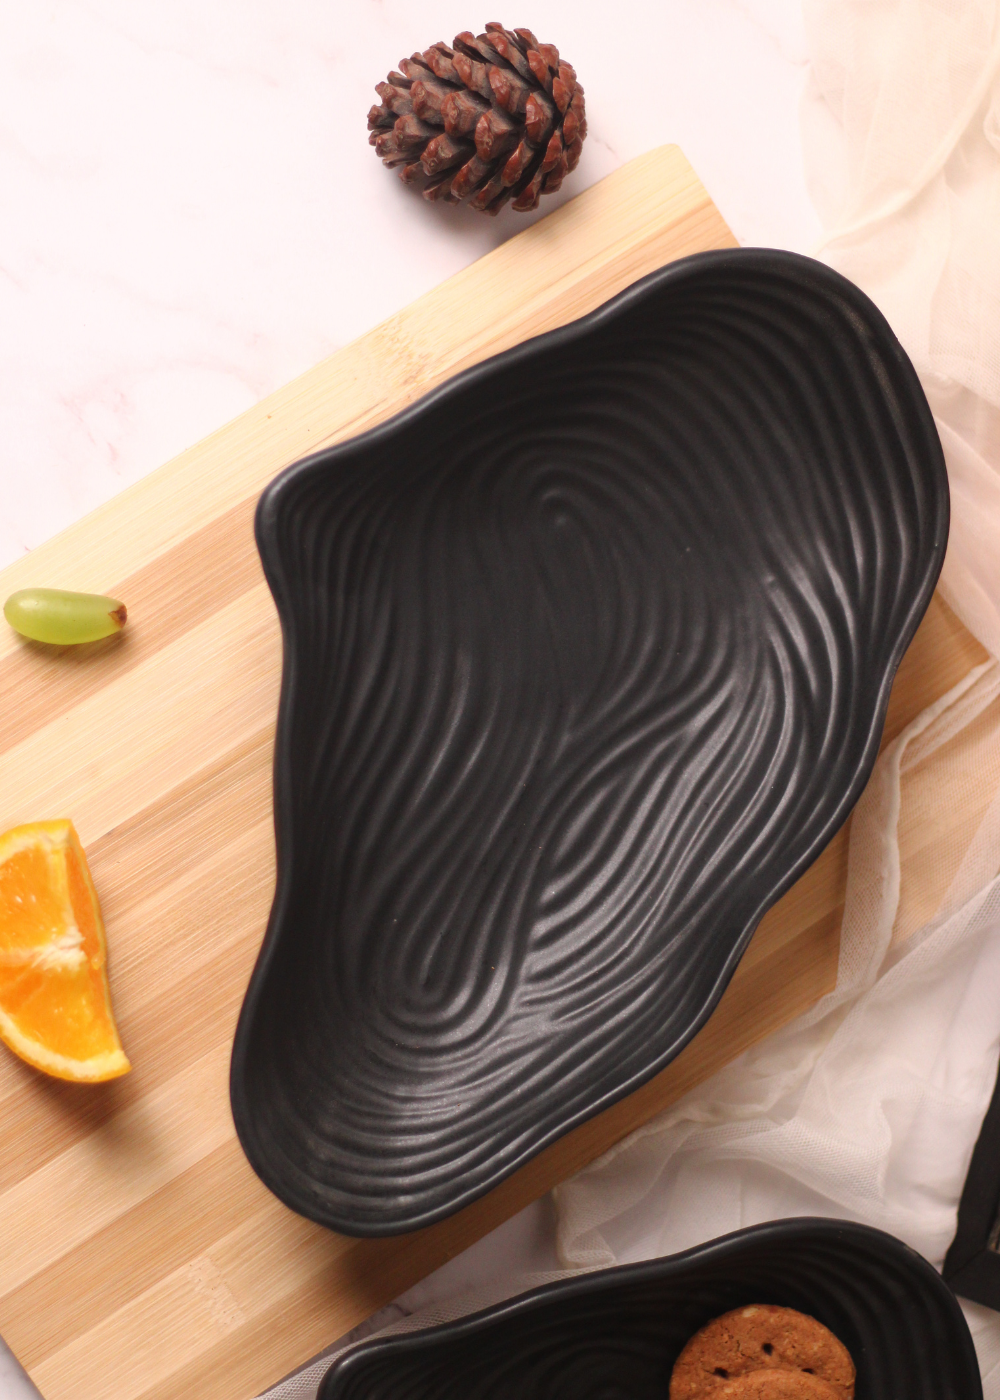 Black mistif bowl on a wooden surface